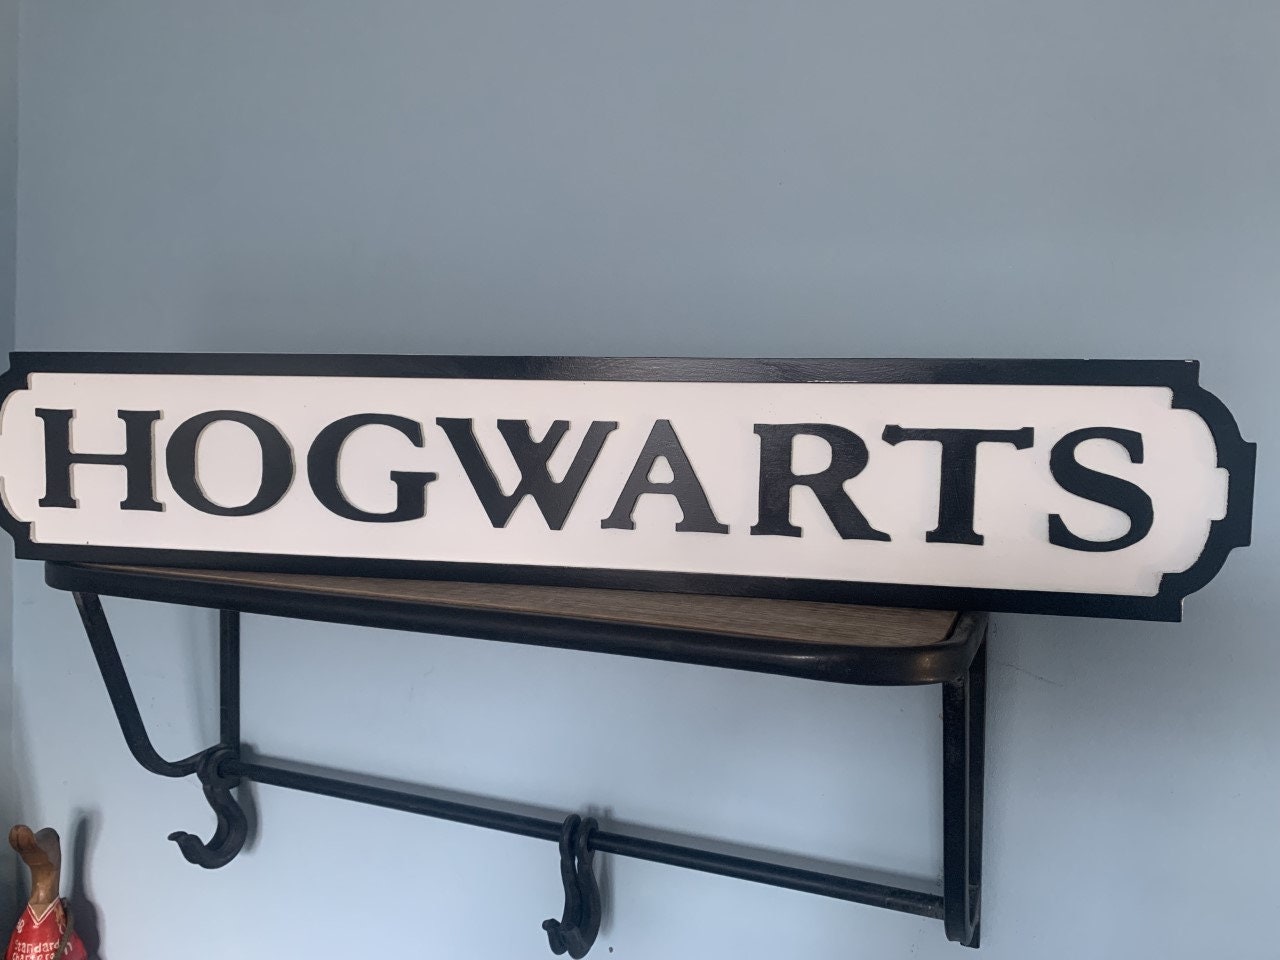 Free Delivery HOGWARTS Harry Potter Retro Vintage Wooden Mini Road Street Sign